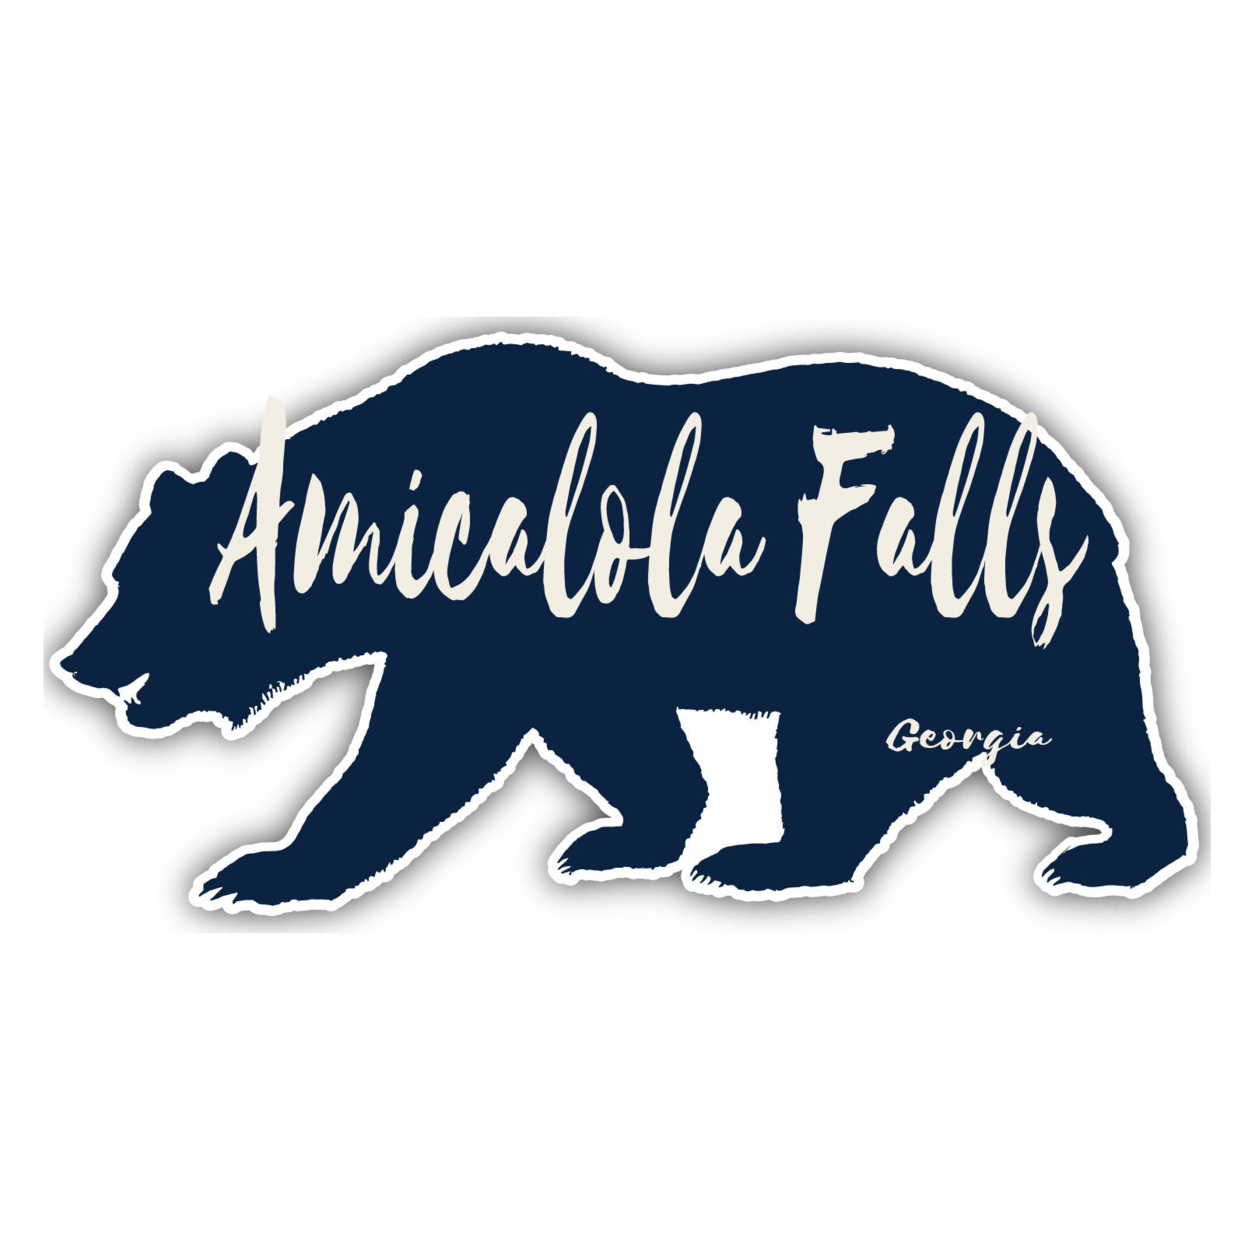 Amicalola Falls Georgia Souvenir Decorative Stickers (Choose Theme And Size) - 4-Pack, 2-Inch, Tent